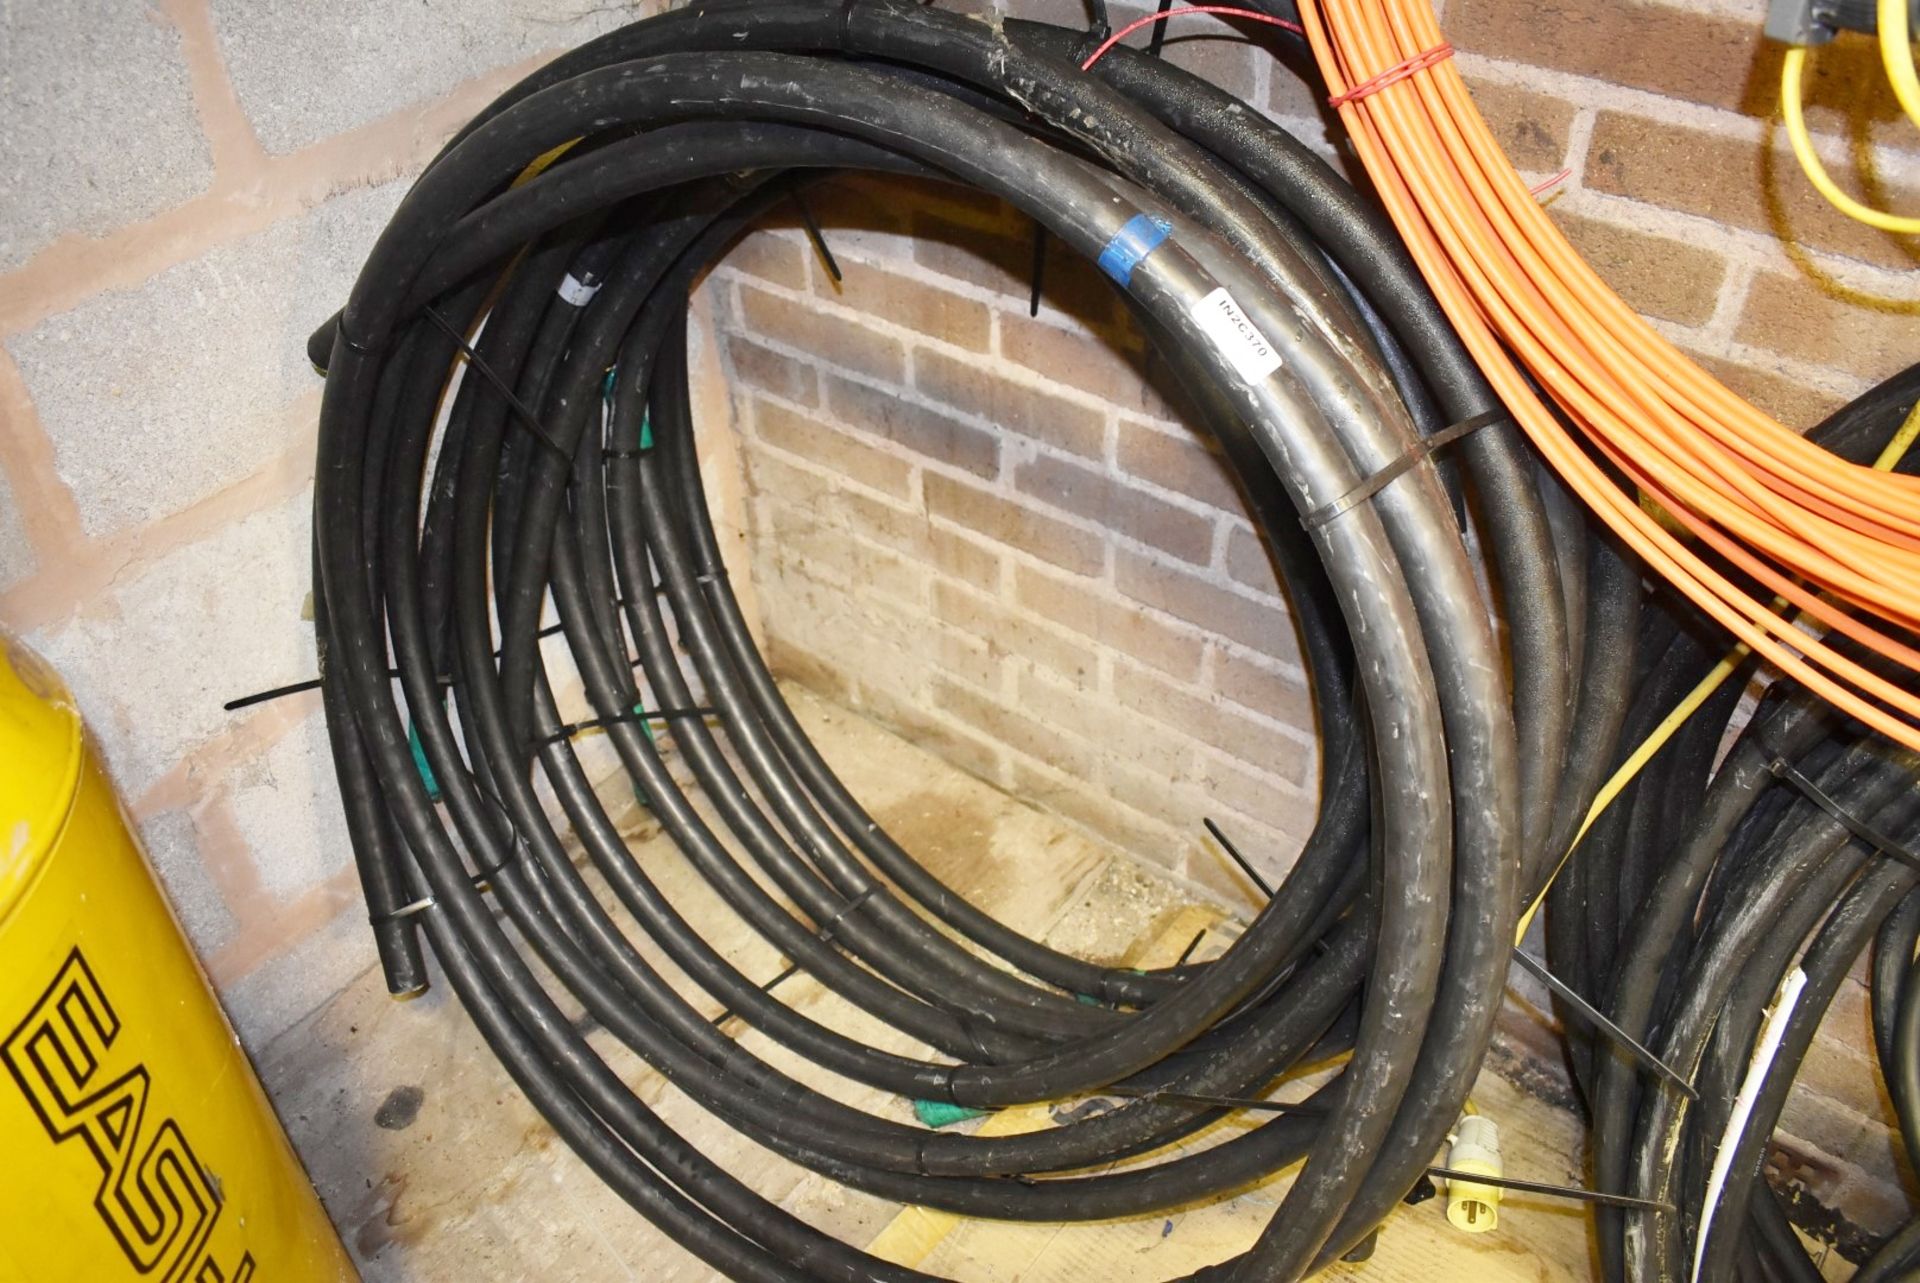 6 x Bundles of Thick Copper Cable - Approx 100cm Diameter Bundles - Image 4 of 5